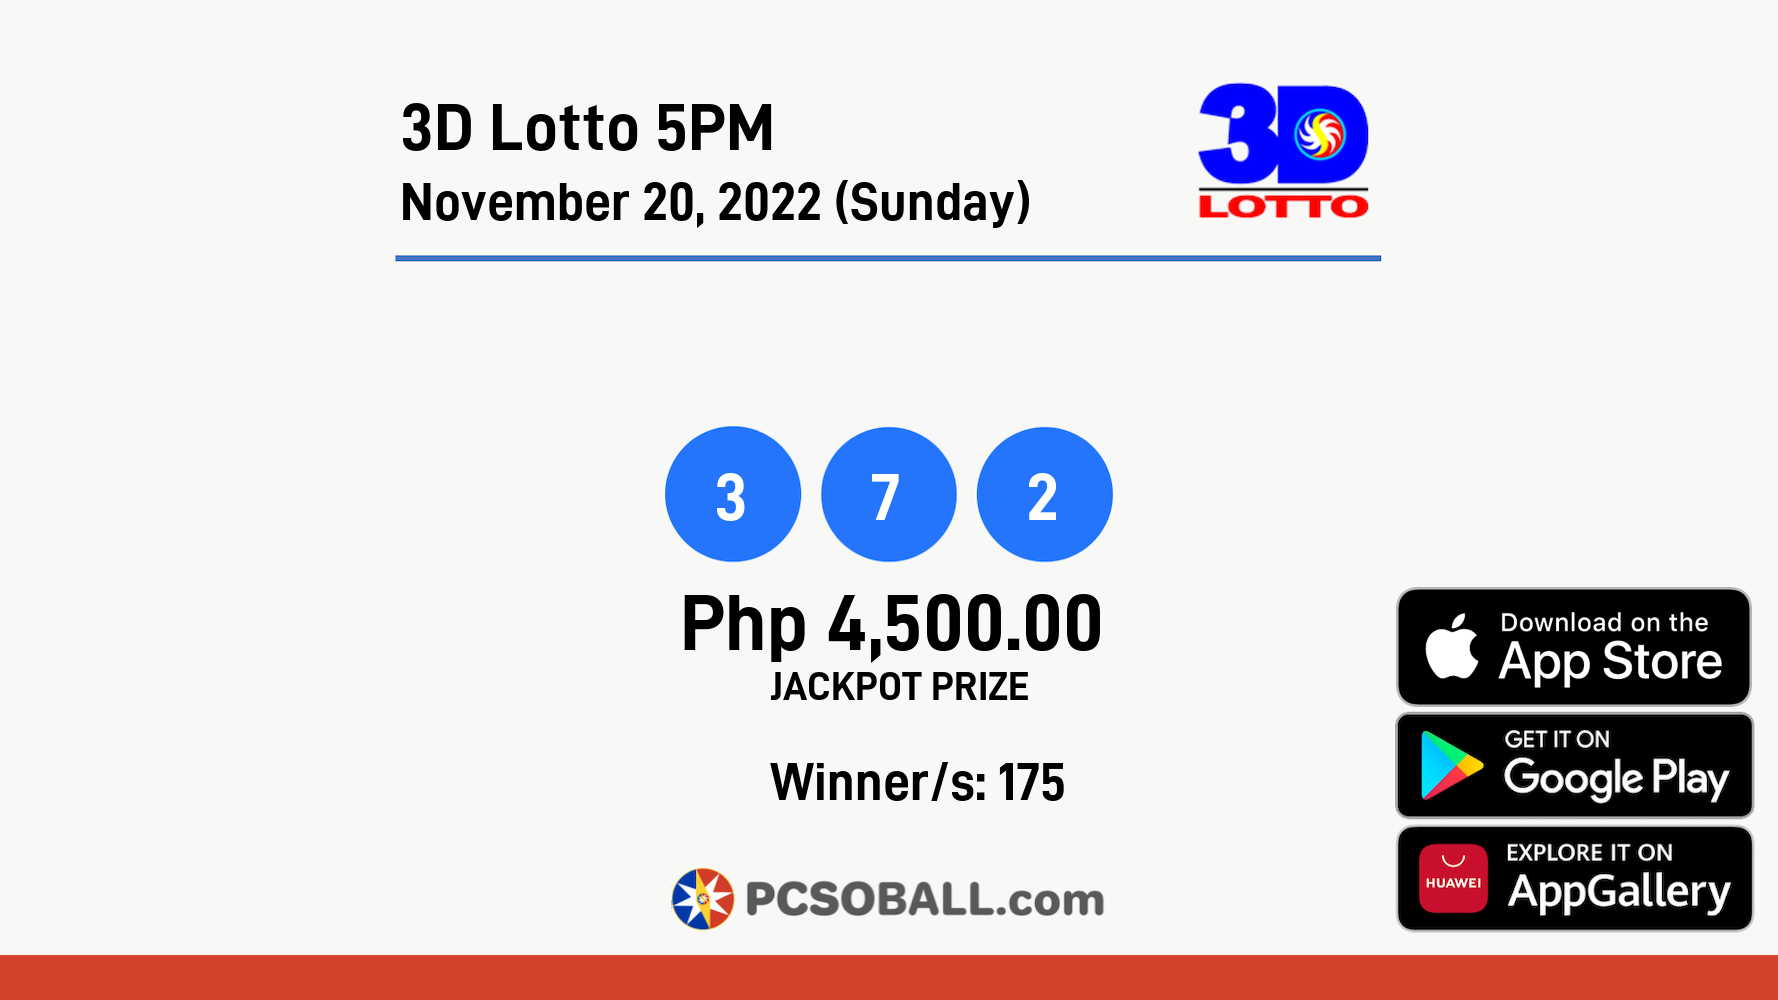 3D Lotto 5PM November 20, 2022 (Sunday) Result